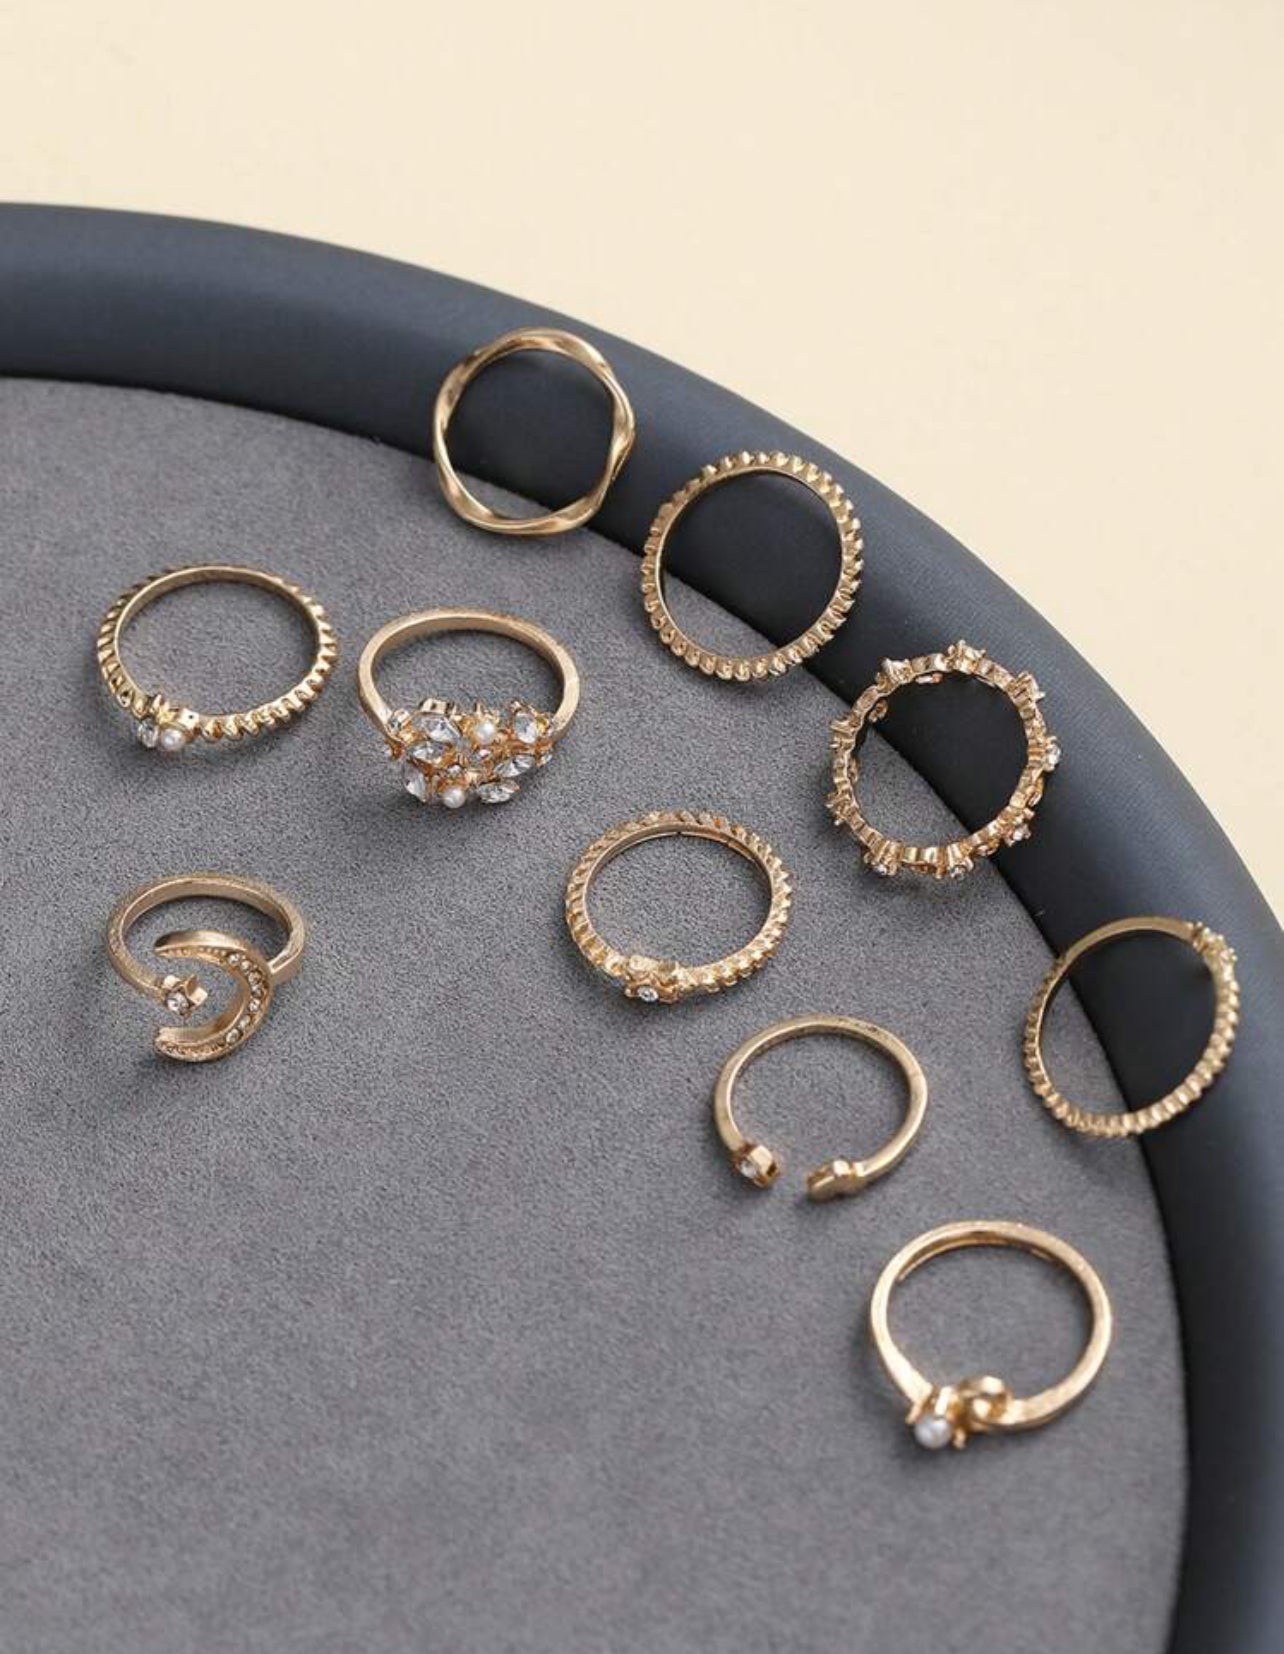 10pcs/set Fashionable Zinc Alloy Star & Moon & Rhinestone Decor Ring For Women